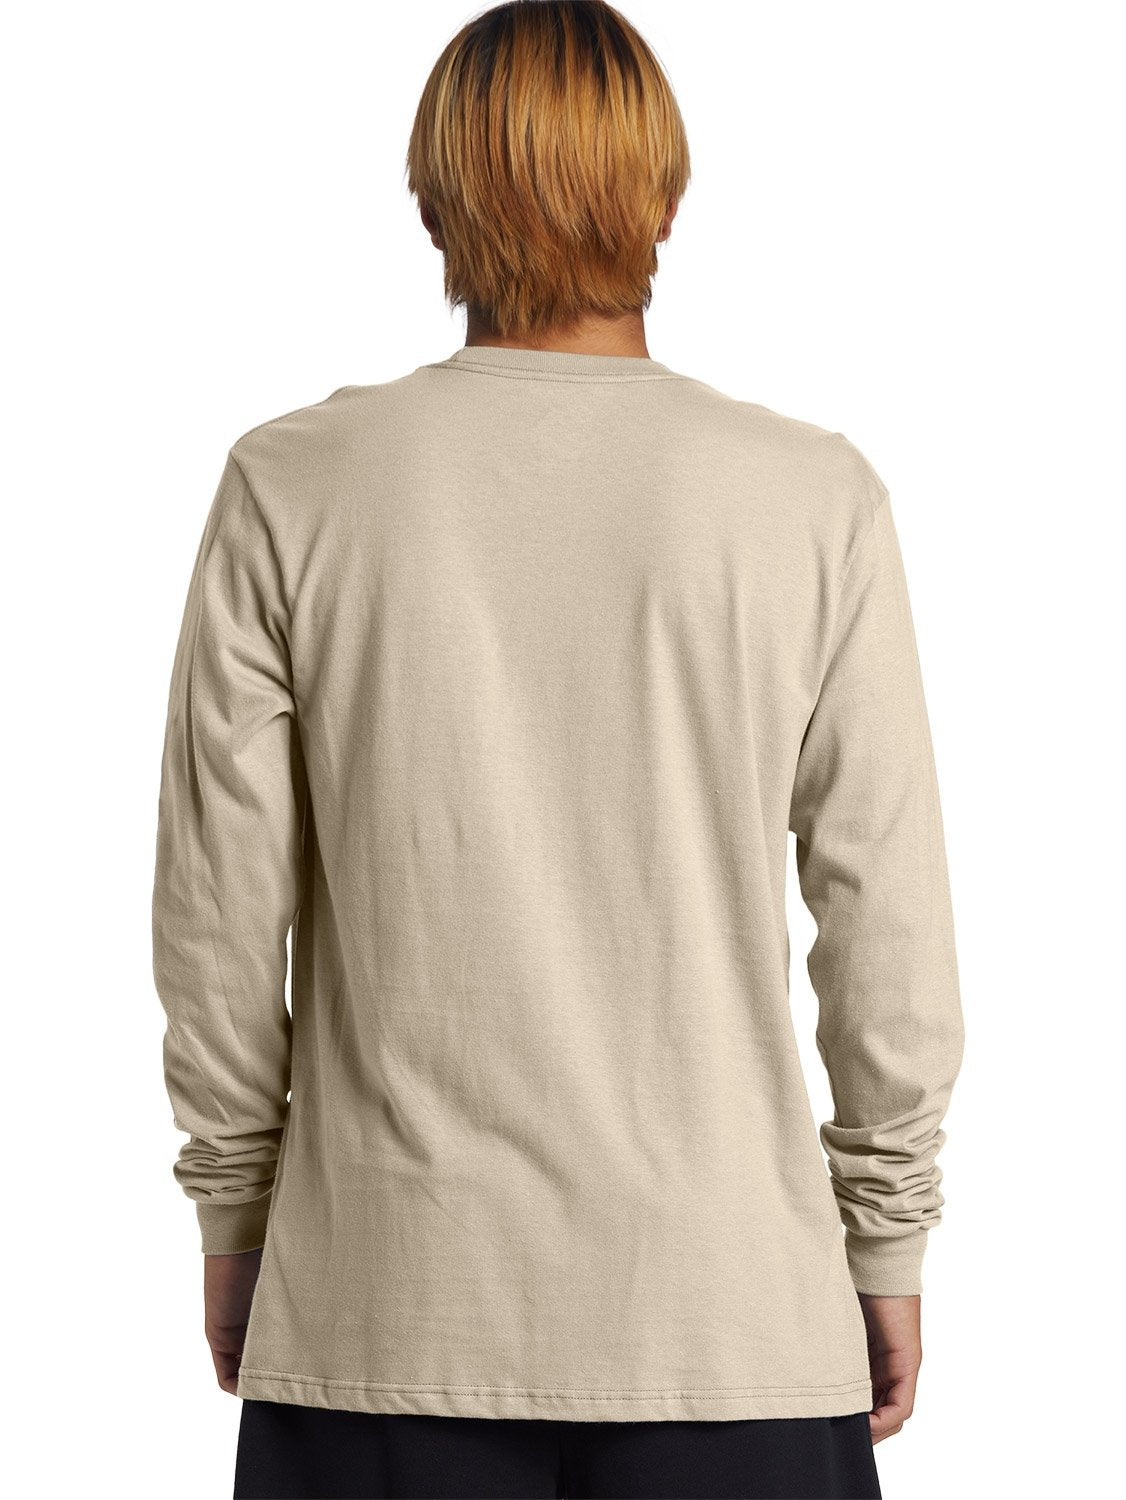 Quiksilver Mens Corp Long Sleeve T-Shirt